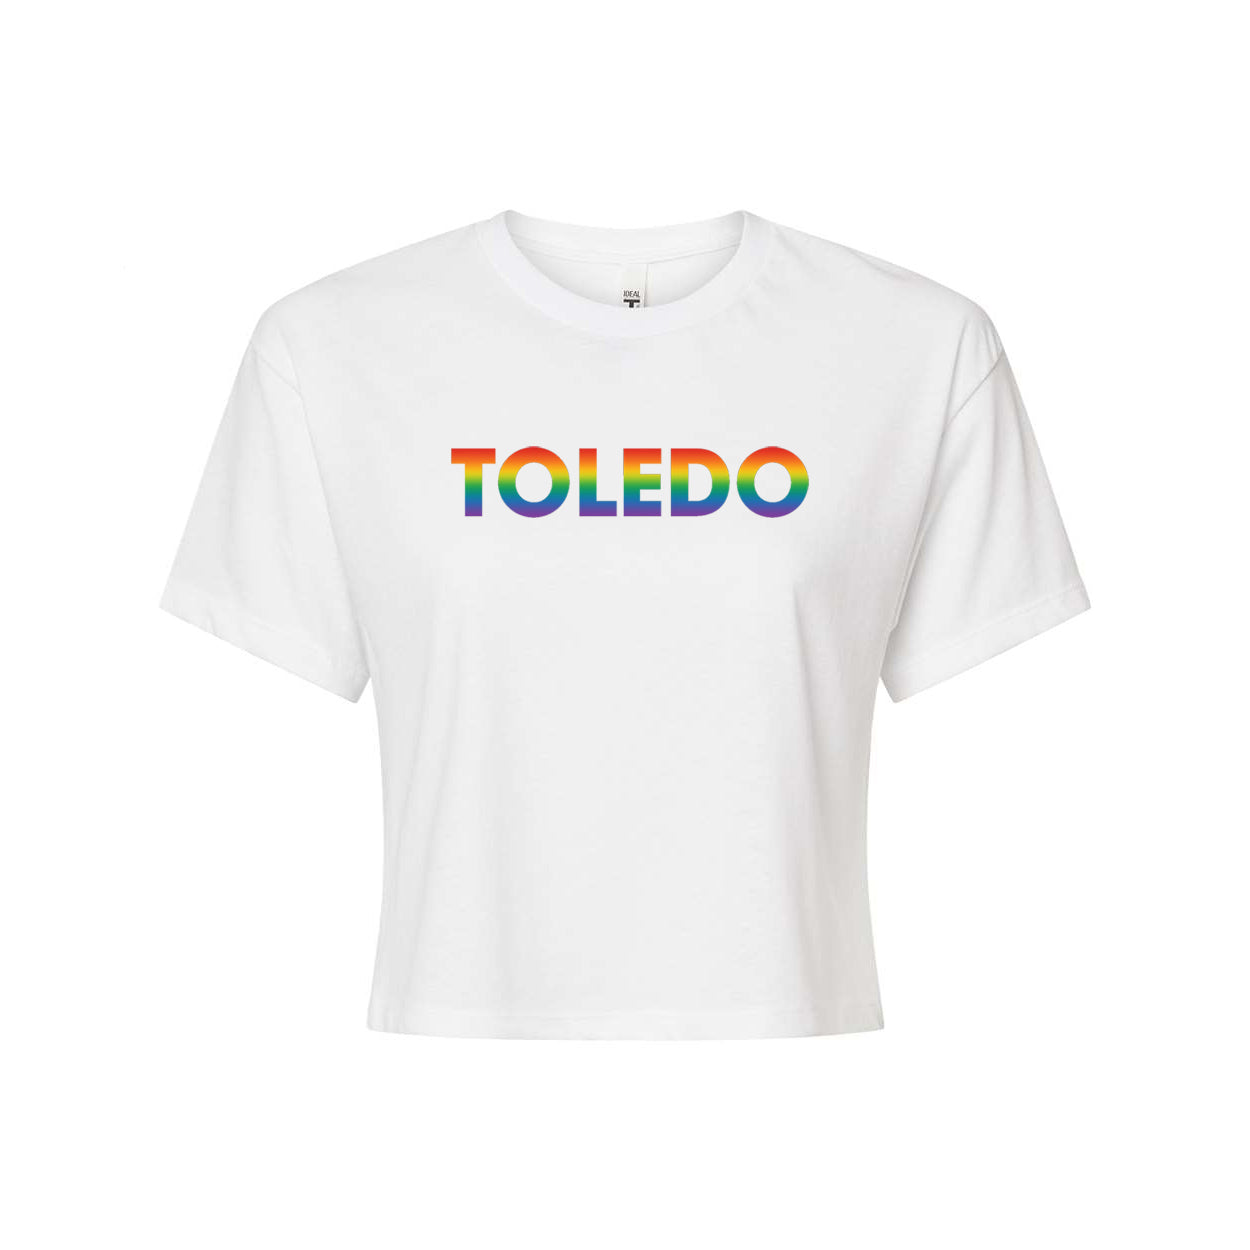 Toledo - Pride Front - Women's Boutique Crop